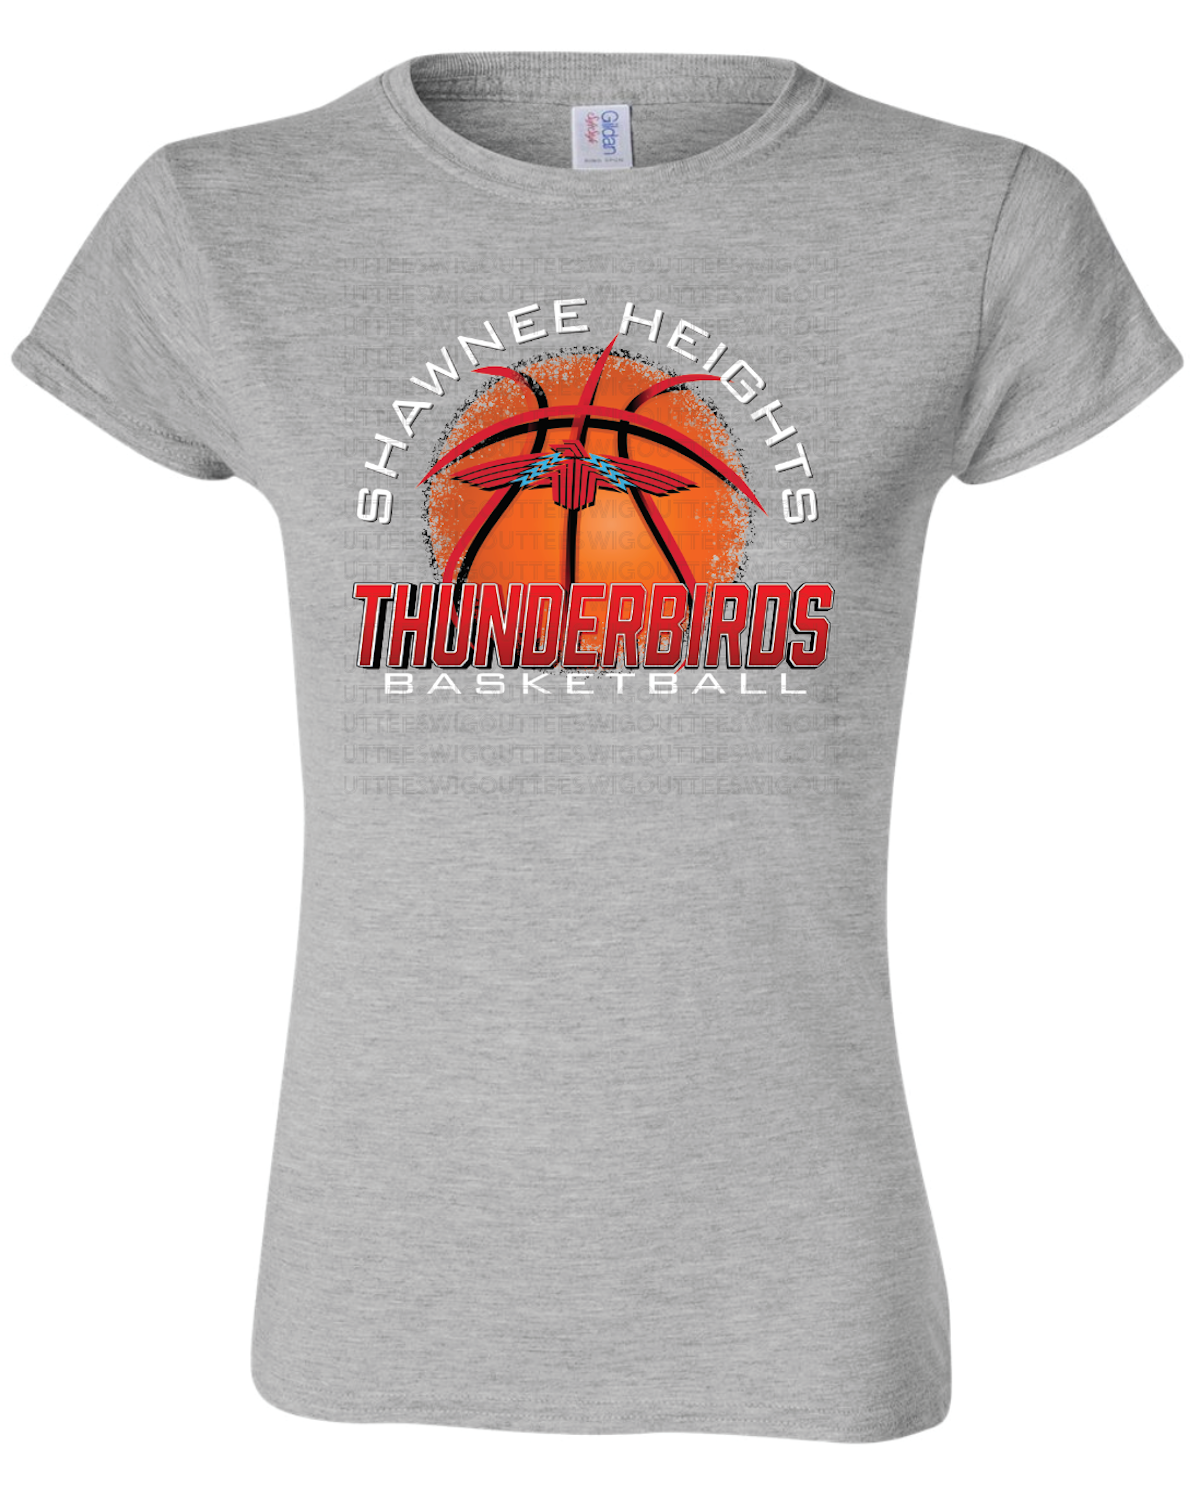 Thunderbirds Basketball Womens Gildan Softstyle T-Shirt